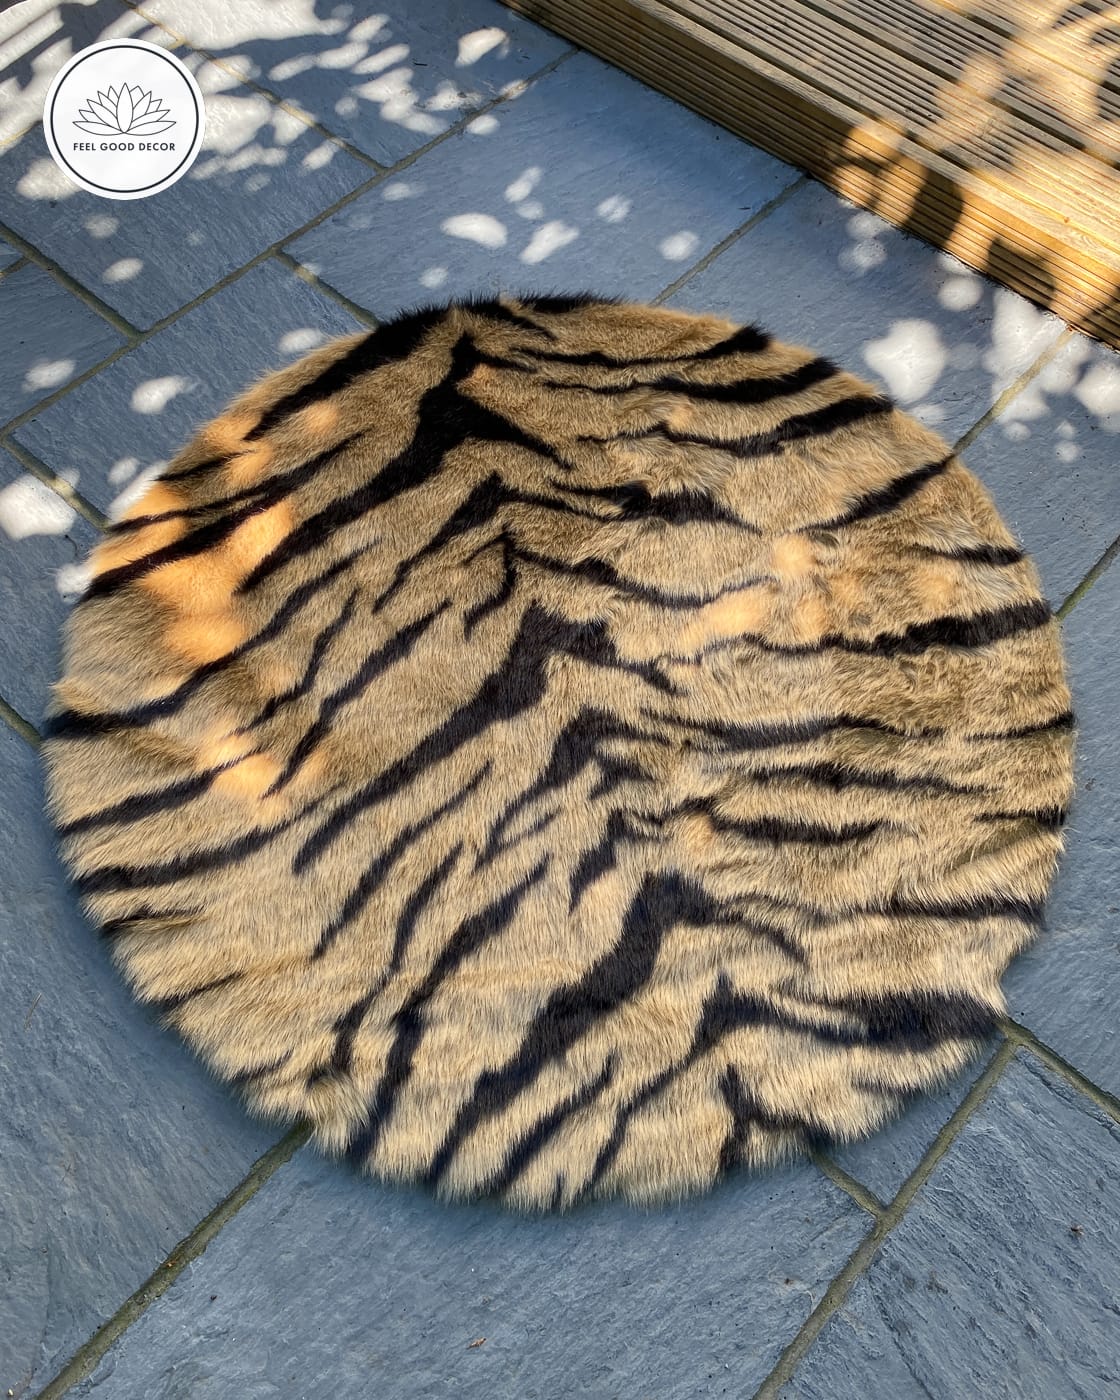 Luxe Animal Print Round Rug Tiger Skin Faux Fur Hide - Feel Good Decor